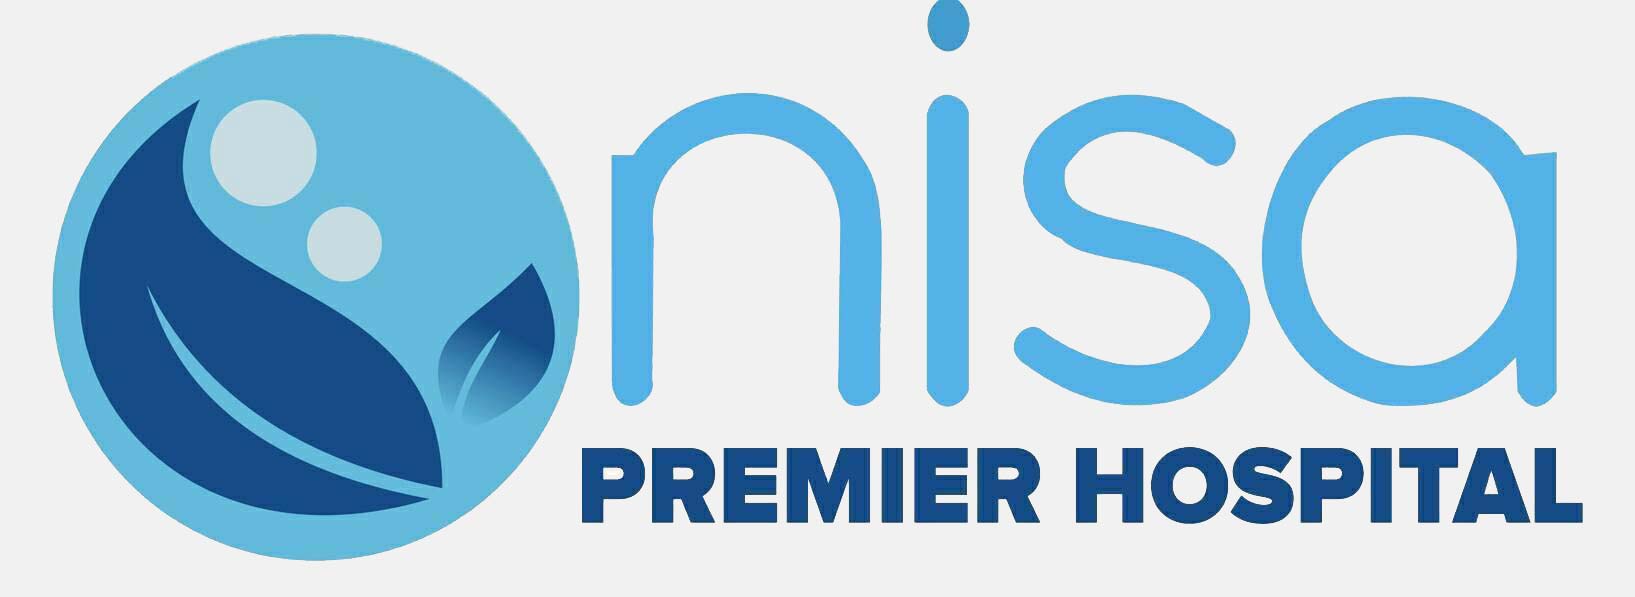 Nisa Premier Hospital logo